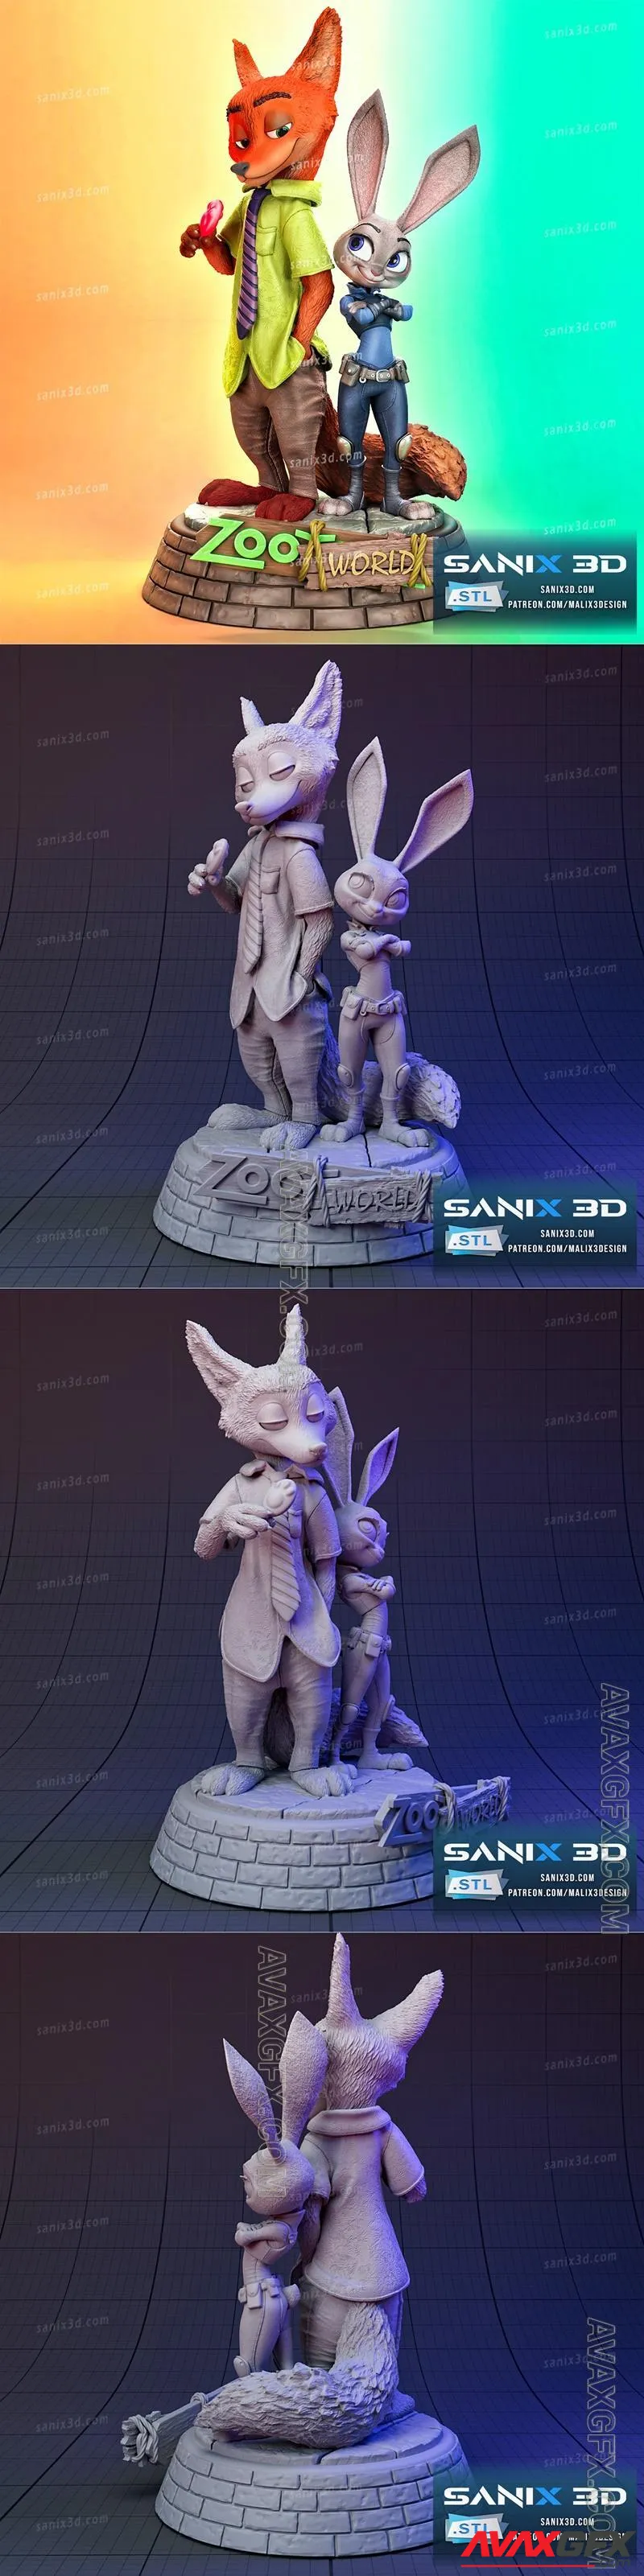 Sanix - Zootopia - STL 3D Model